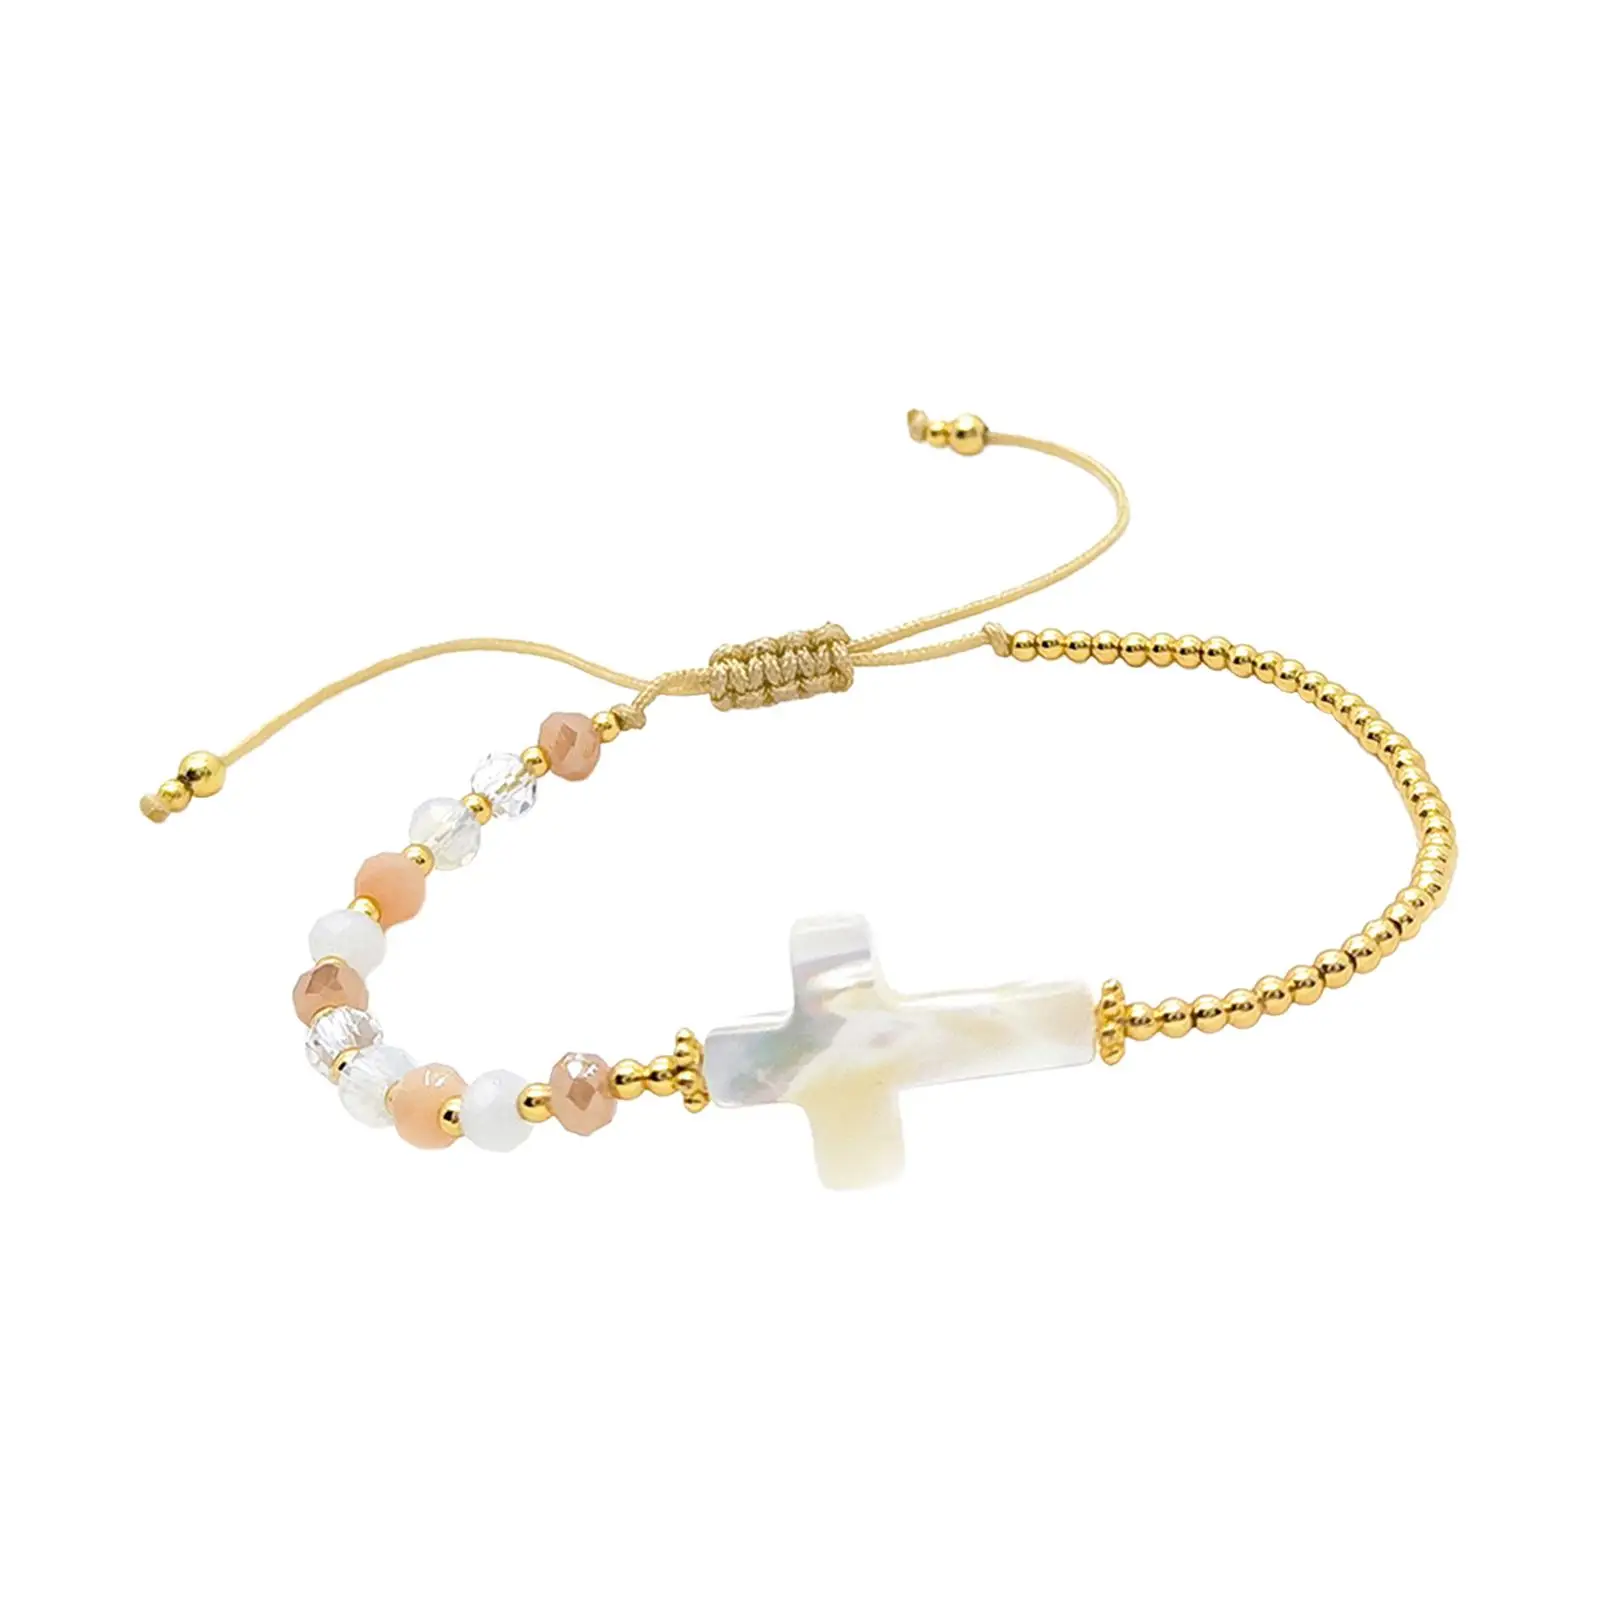 Beads Cross Bracelet Adjustable for Friendship Gift Birthday Gift Party